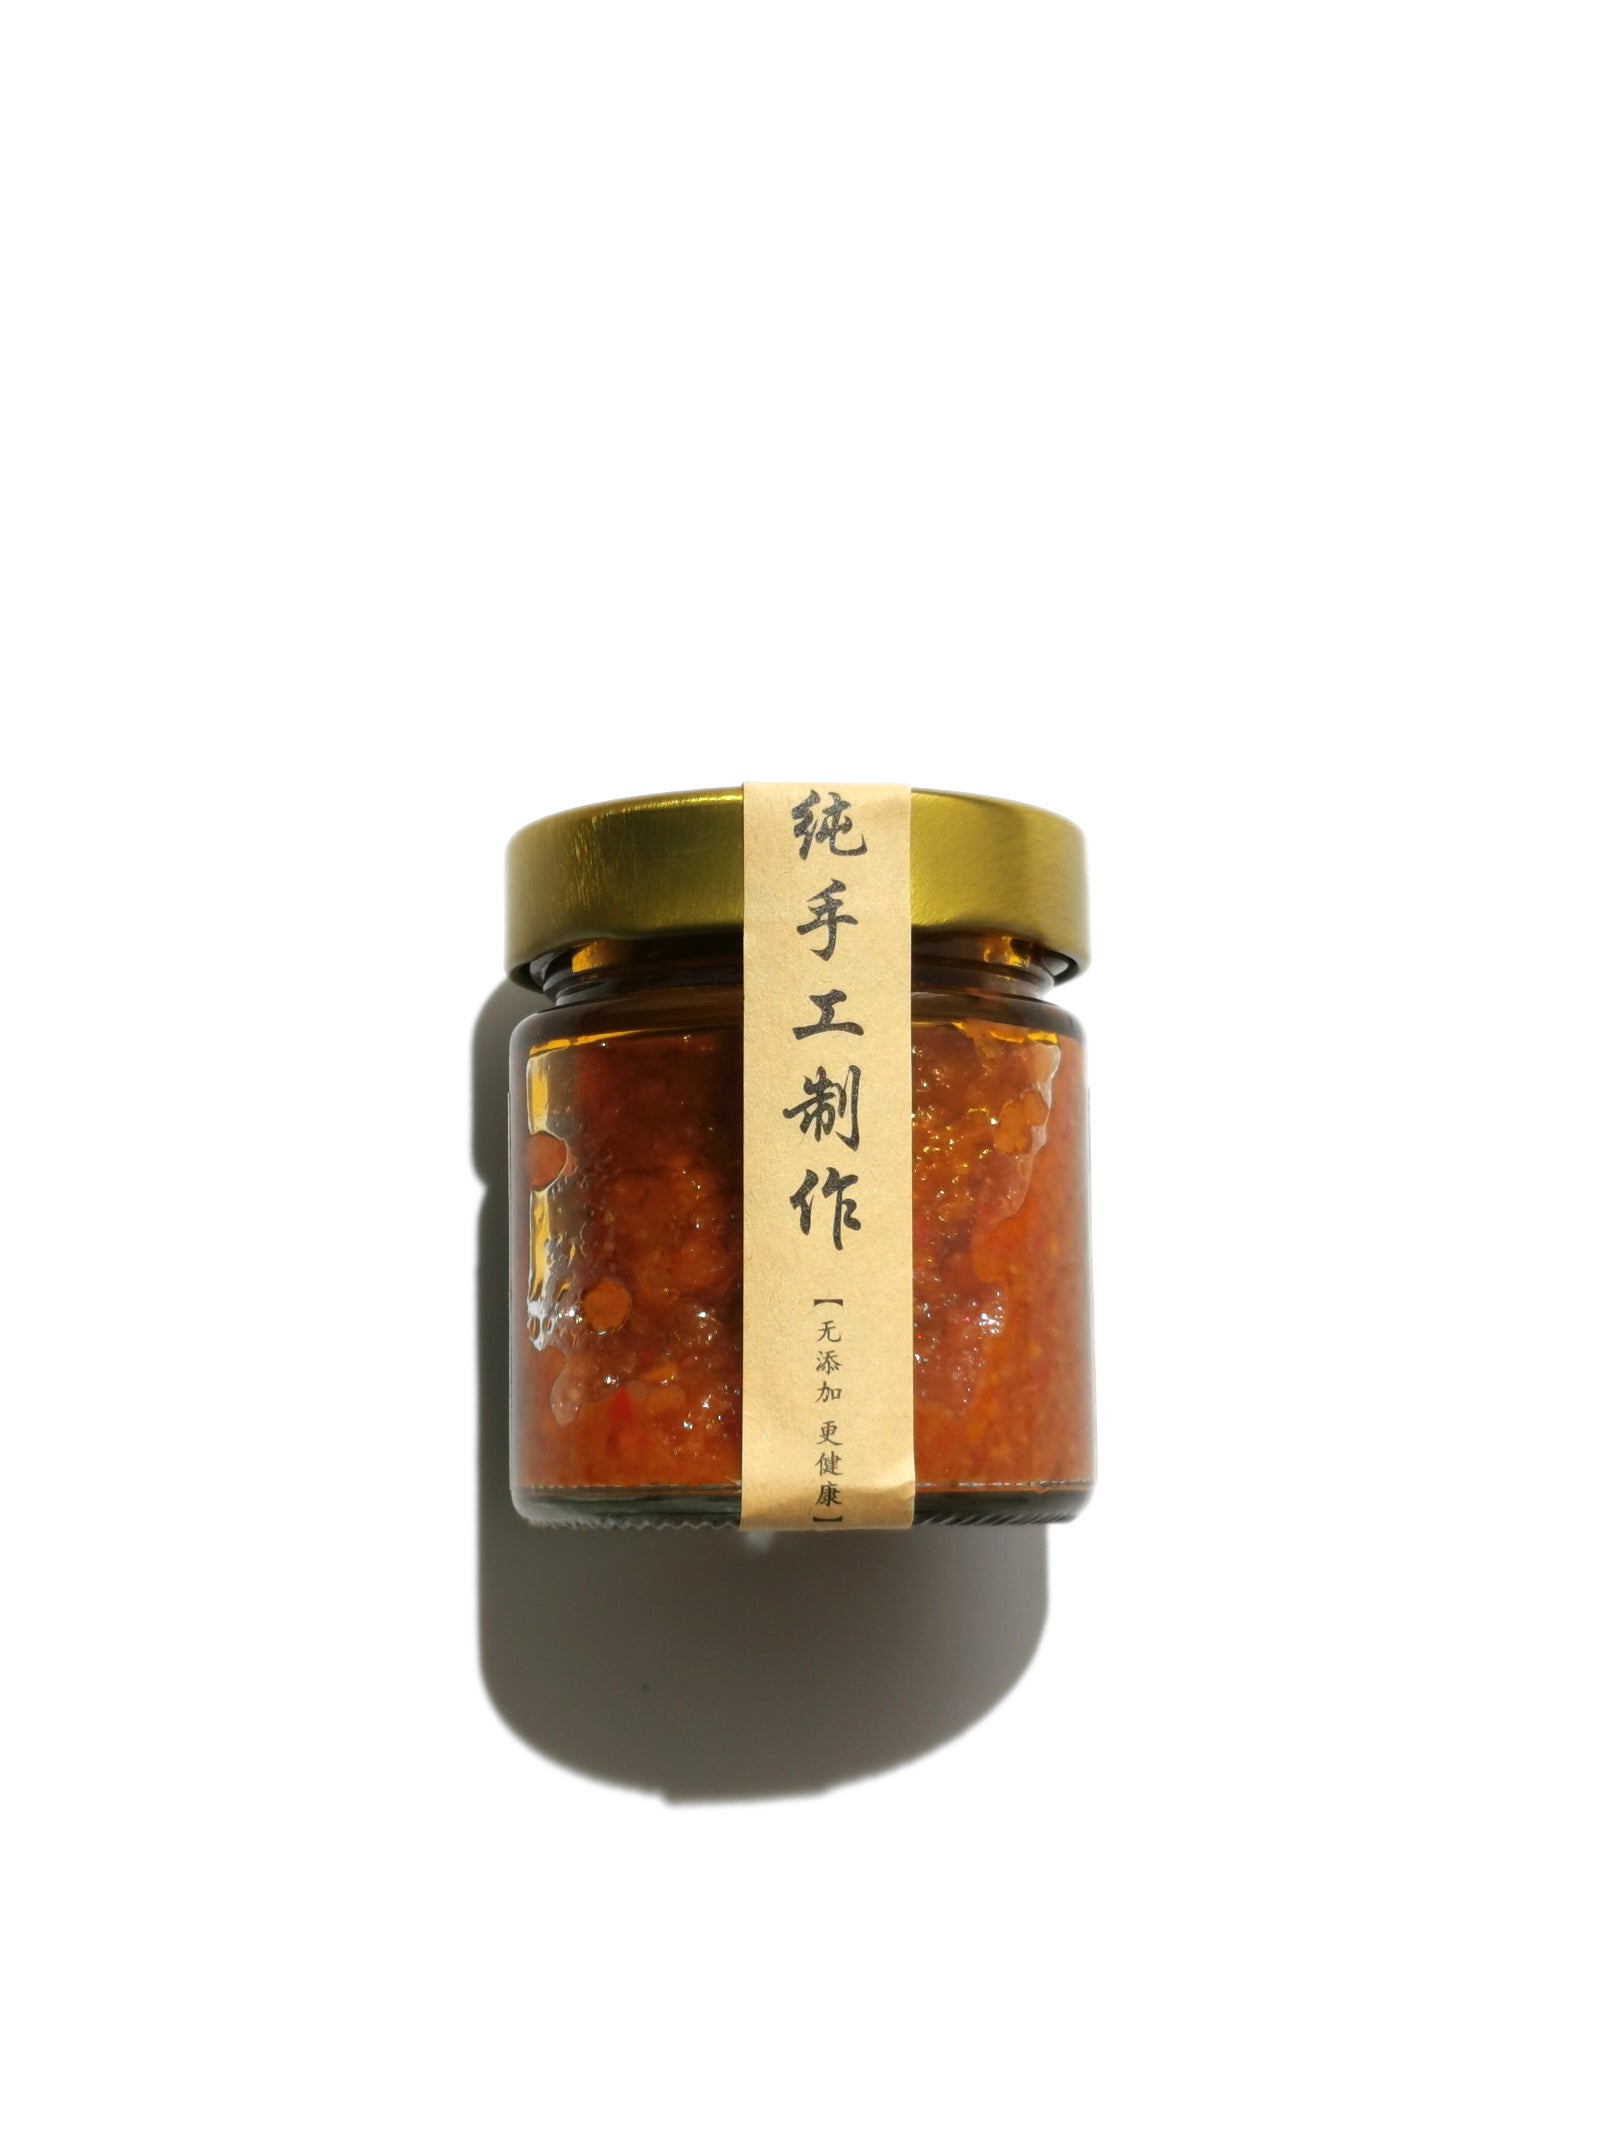 Chao Shan Chili Sauce 潮汕辣椒酱 110g